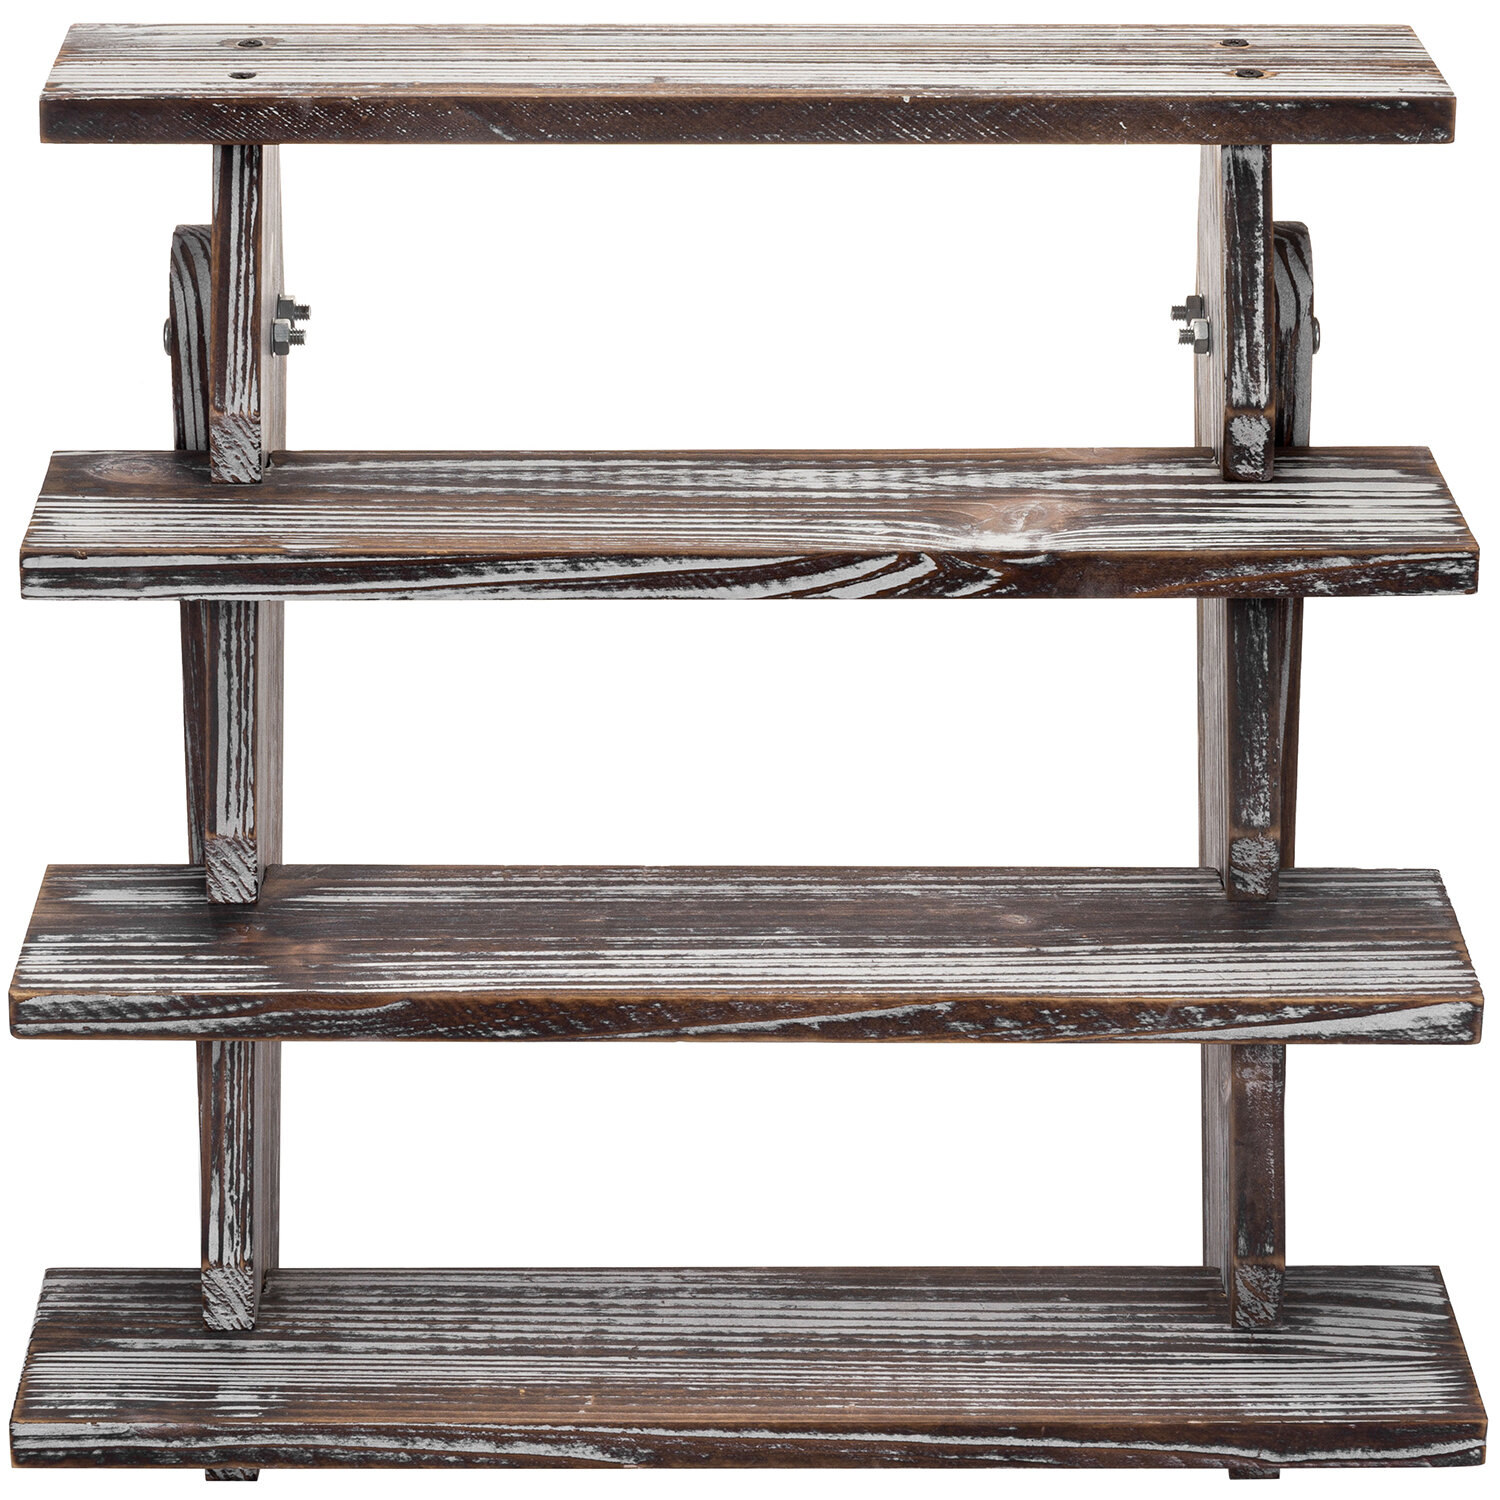 4 Tier Cascading Whitewashed Wood Retail Stair Shelf Display Riser